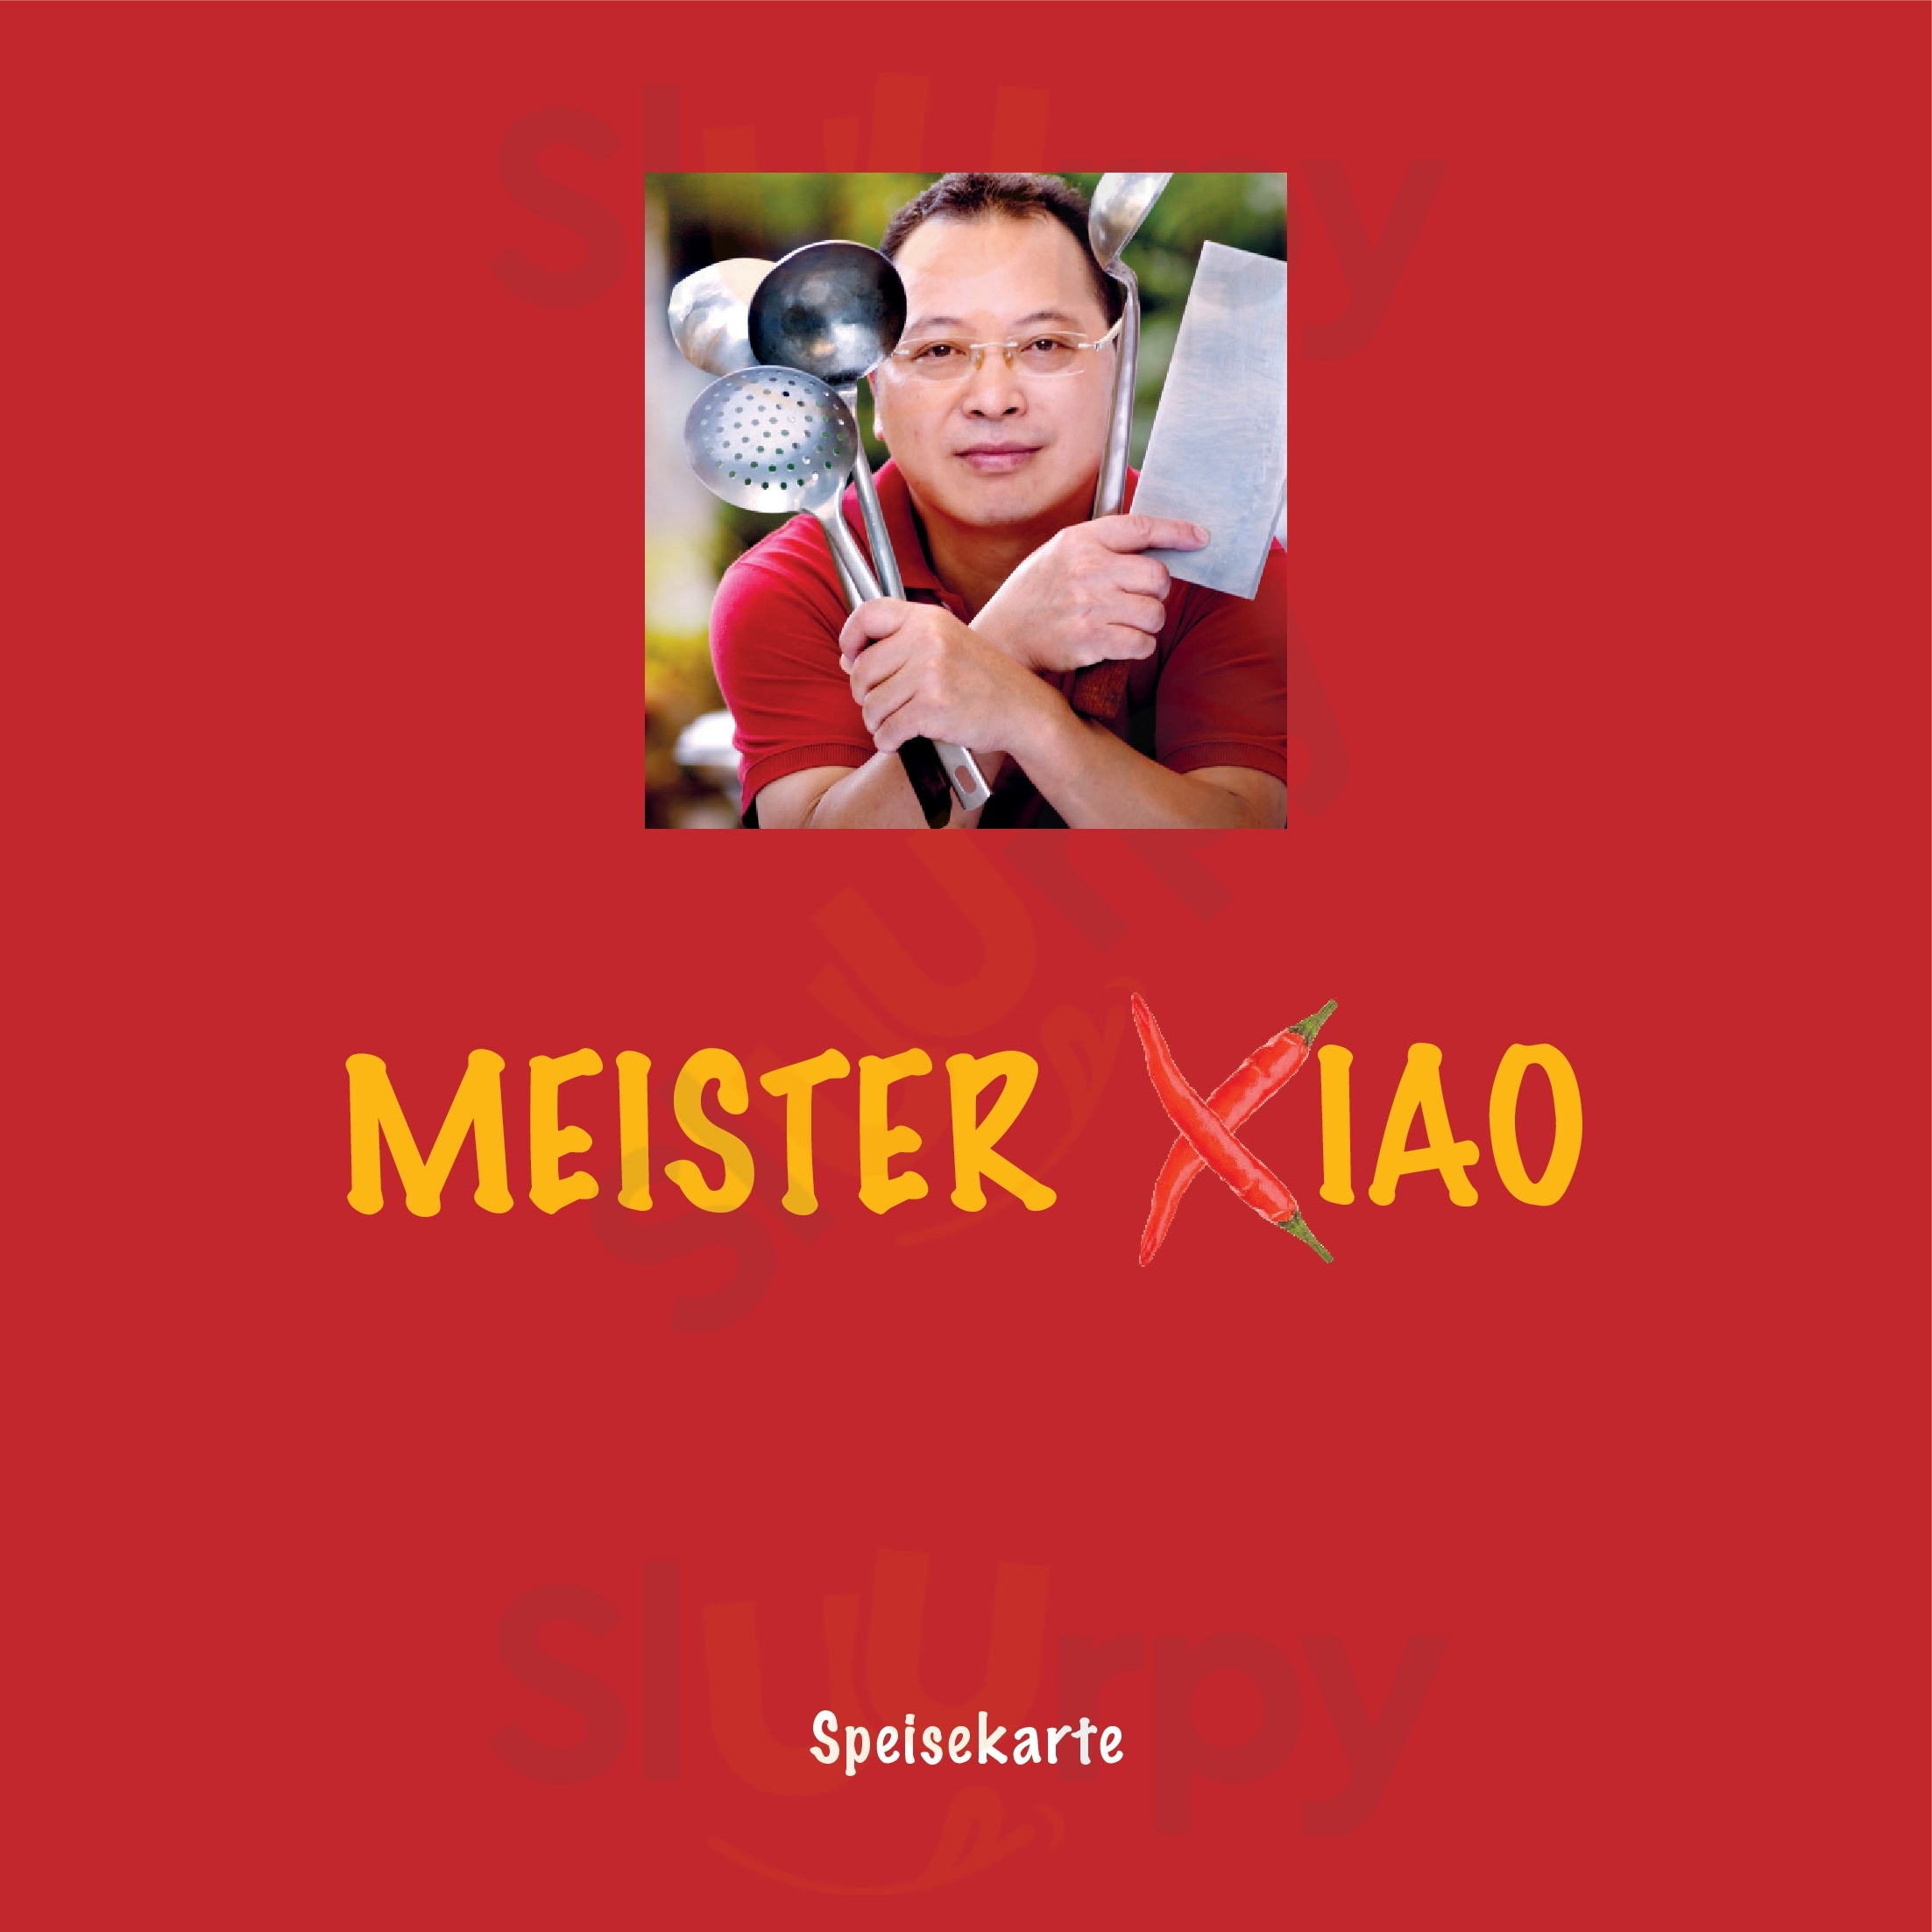 Meister Xiao Wien Menu - 1